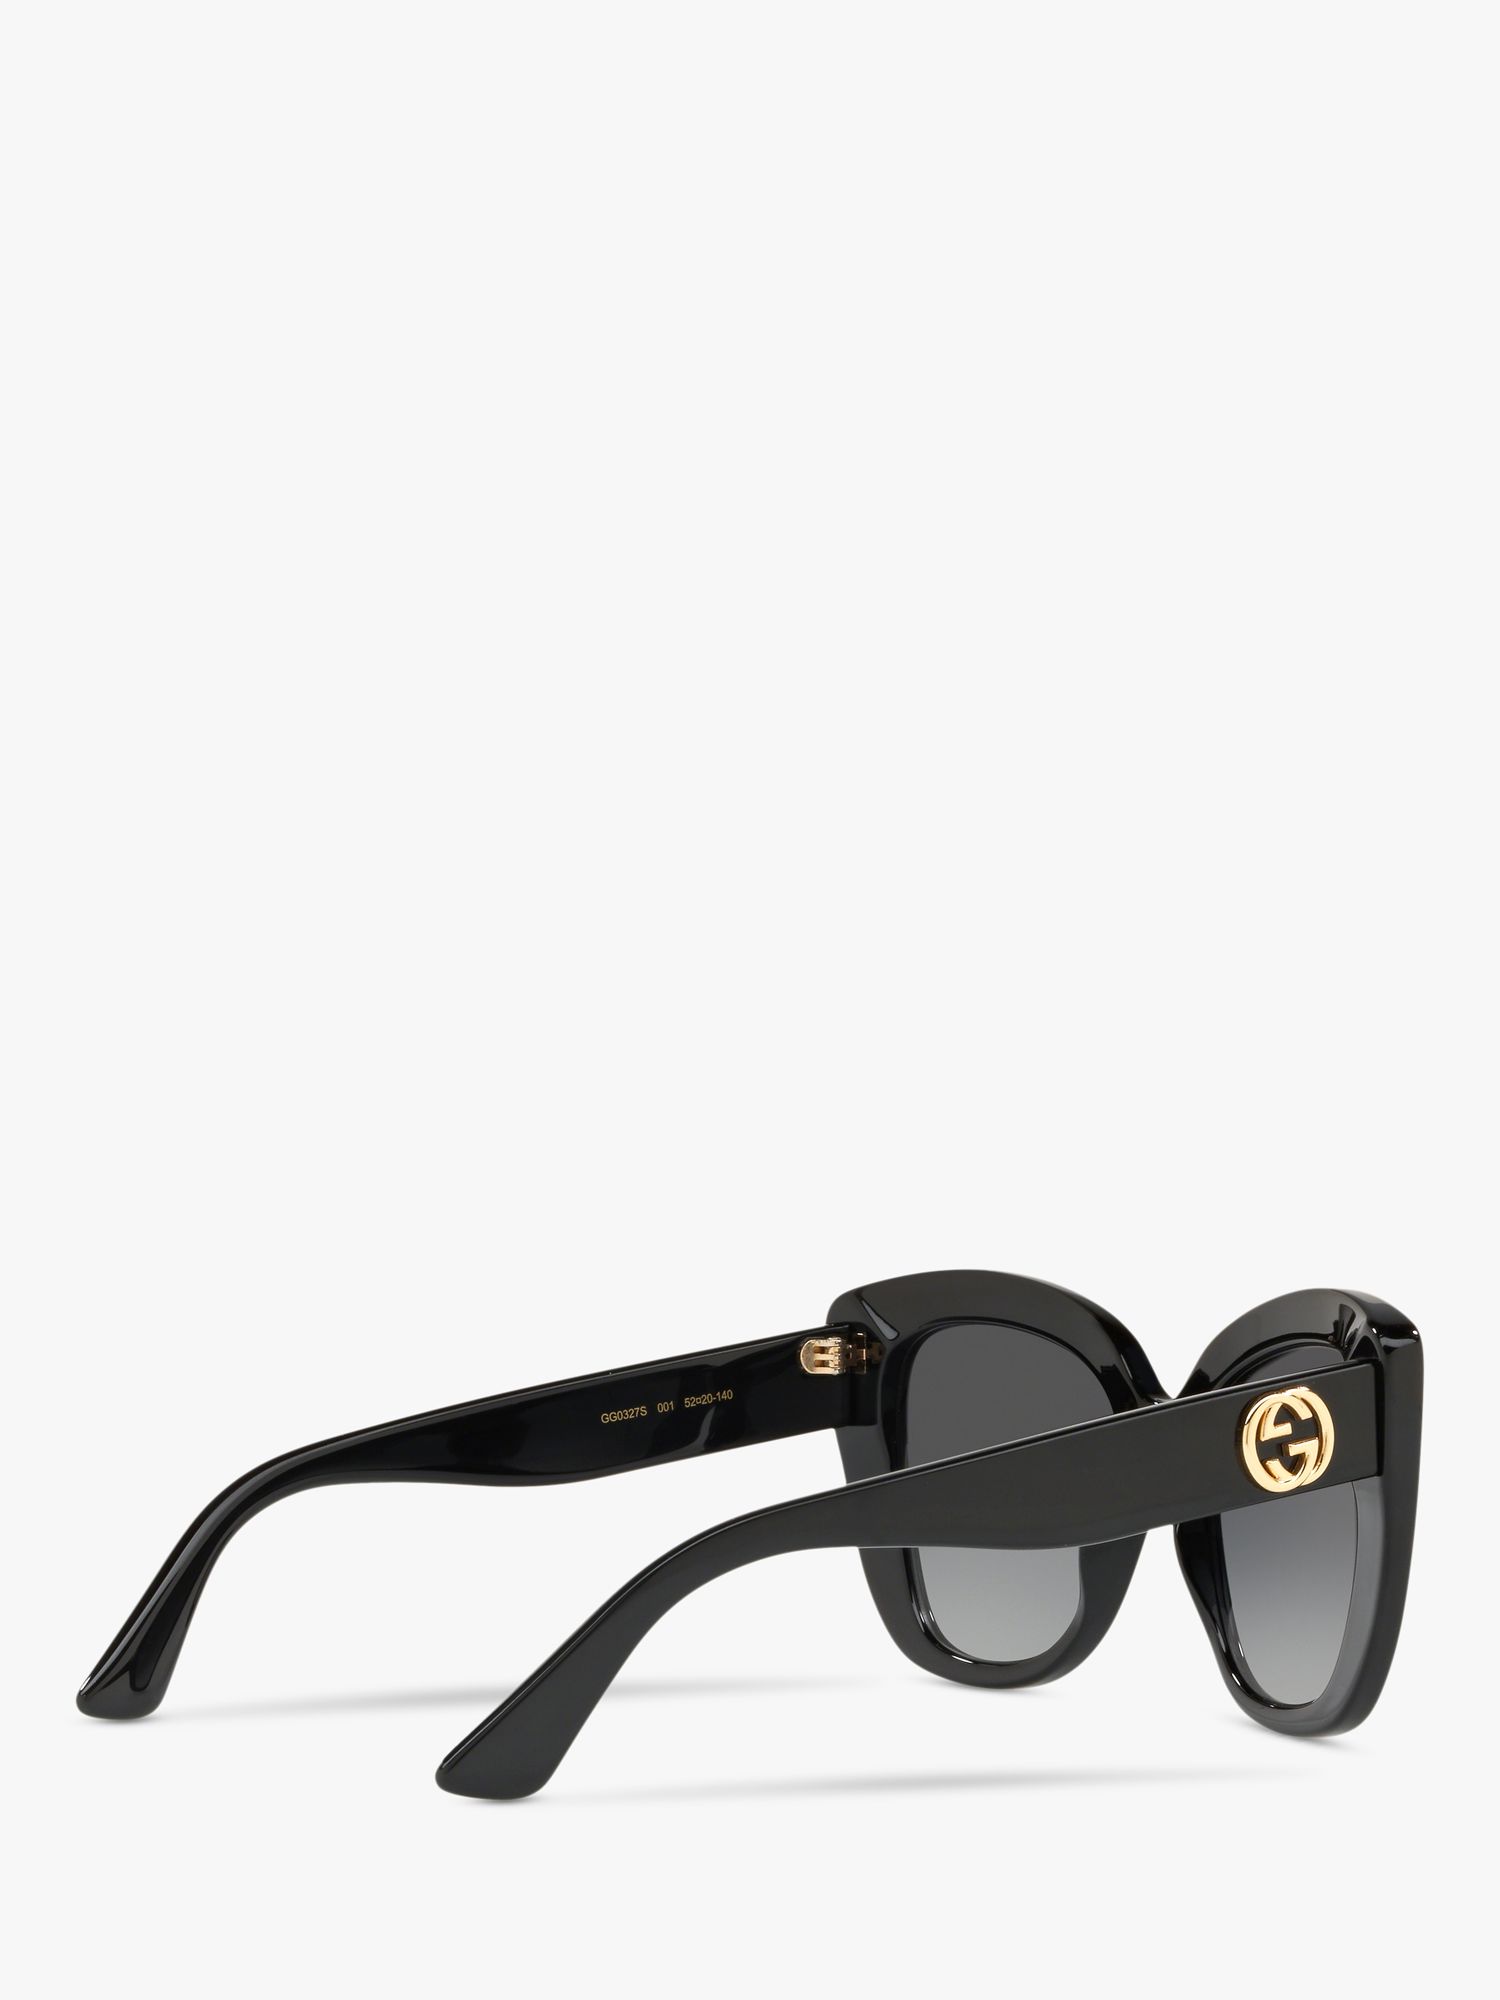 Buy Gucci GC001150 Women's Cat's Eye Sunglasses, Black/Grey Gradient Online at johnlewis.com